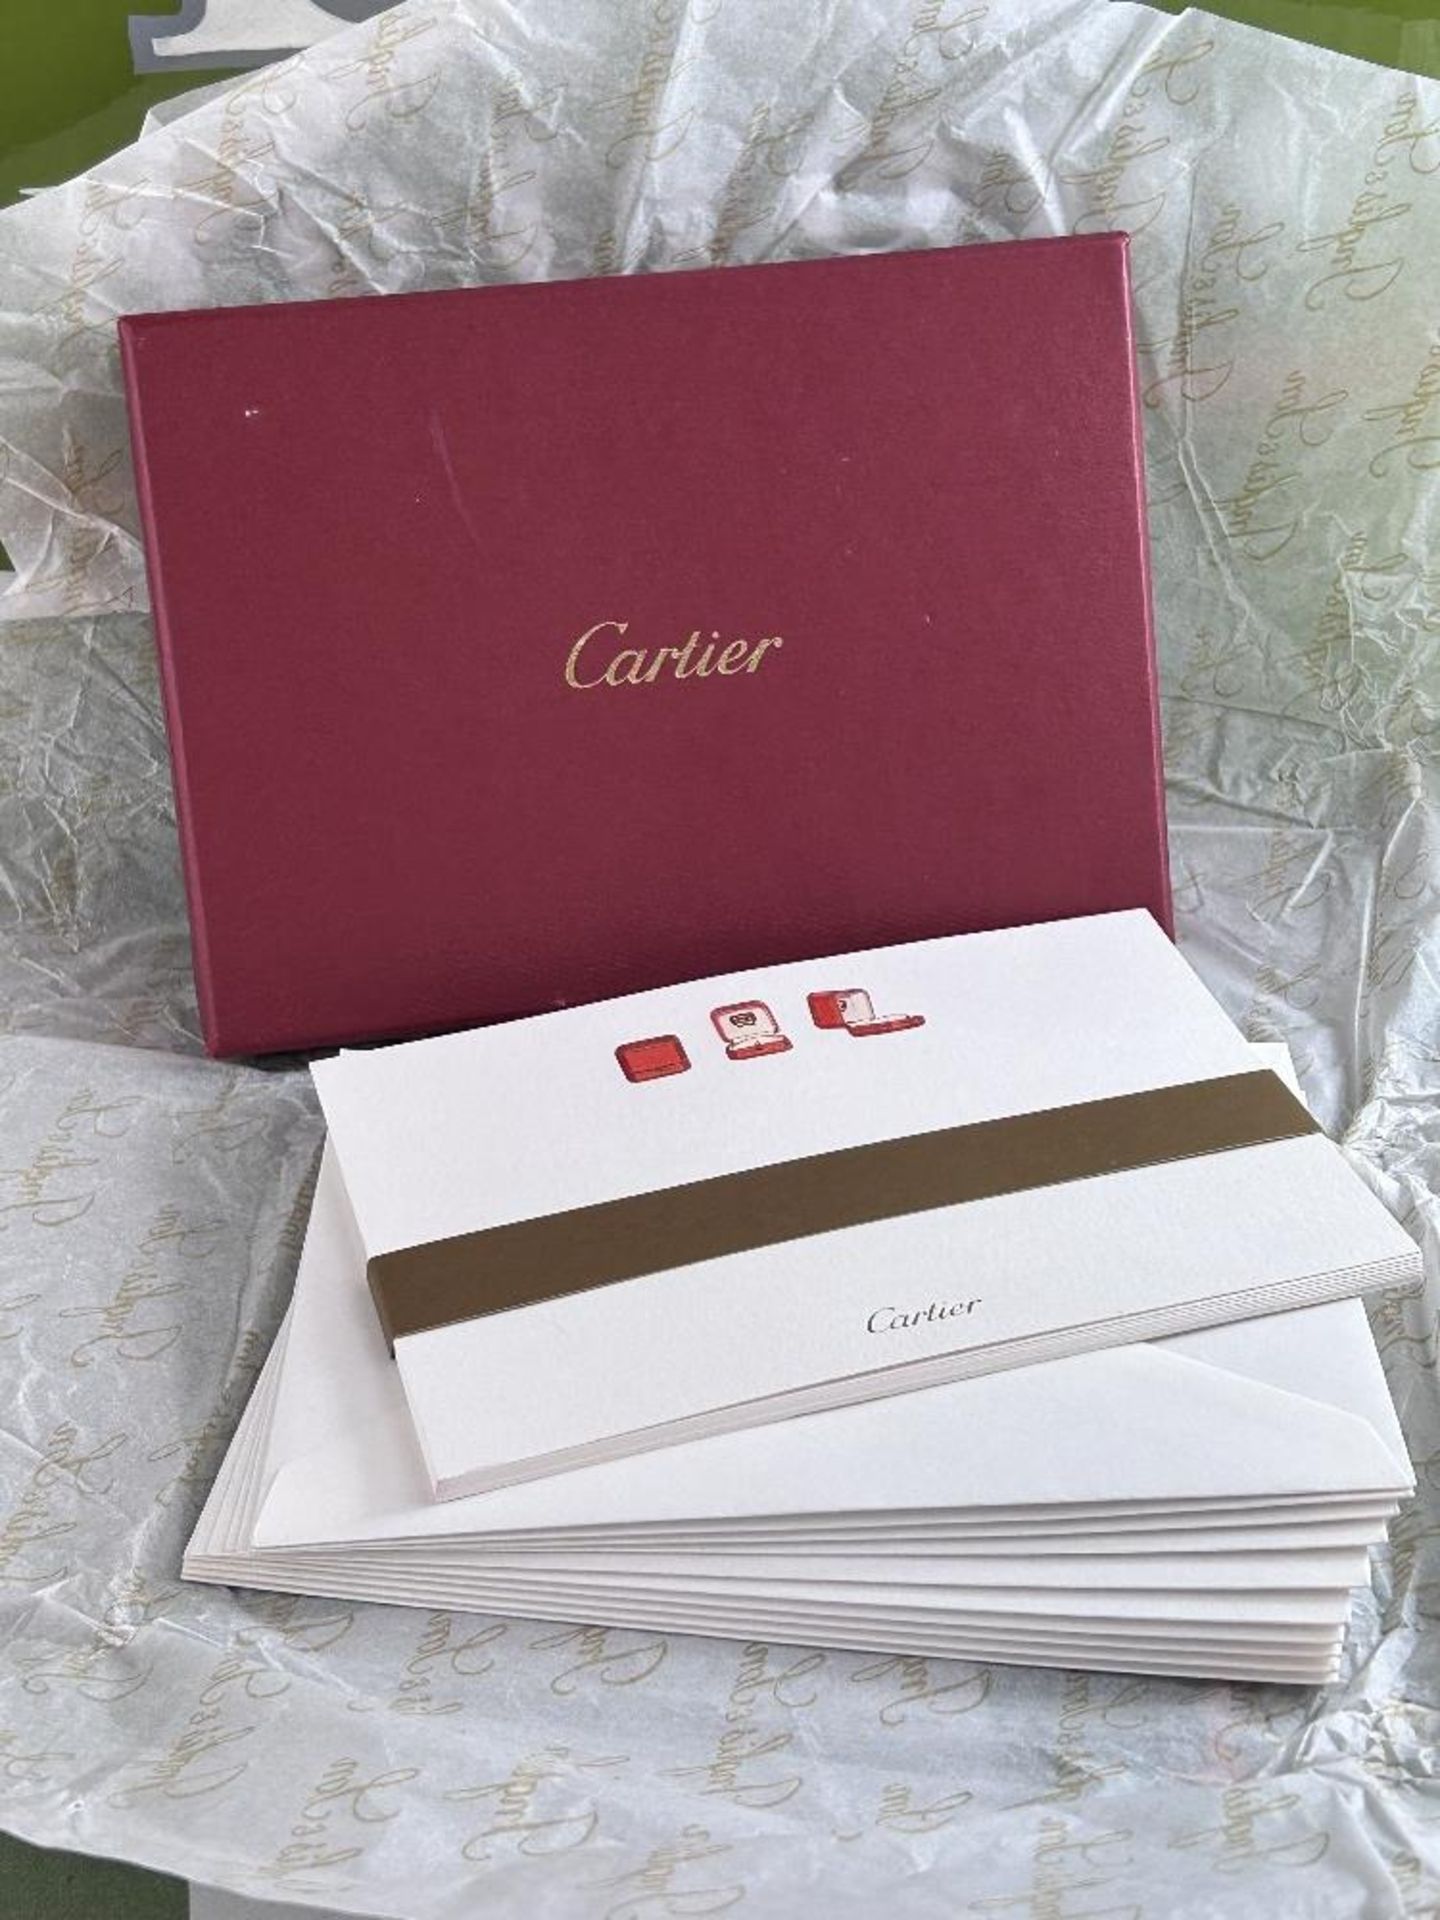 Cartier Paris Notelets/Thankyou Cards & Envelopes - Image 3 of 3